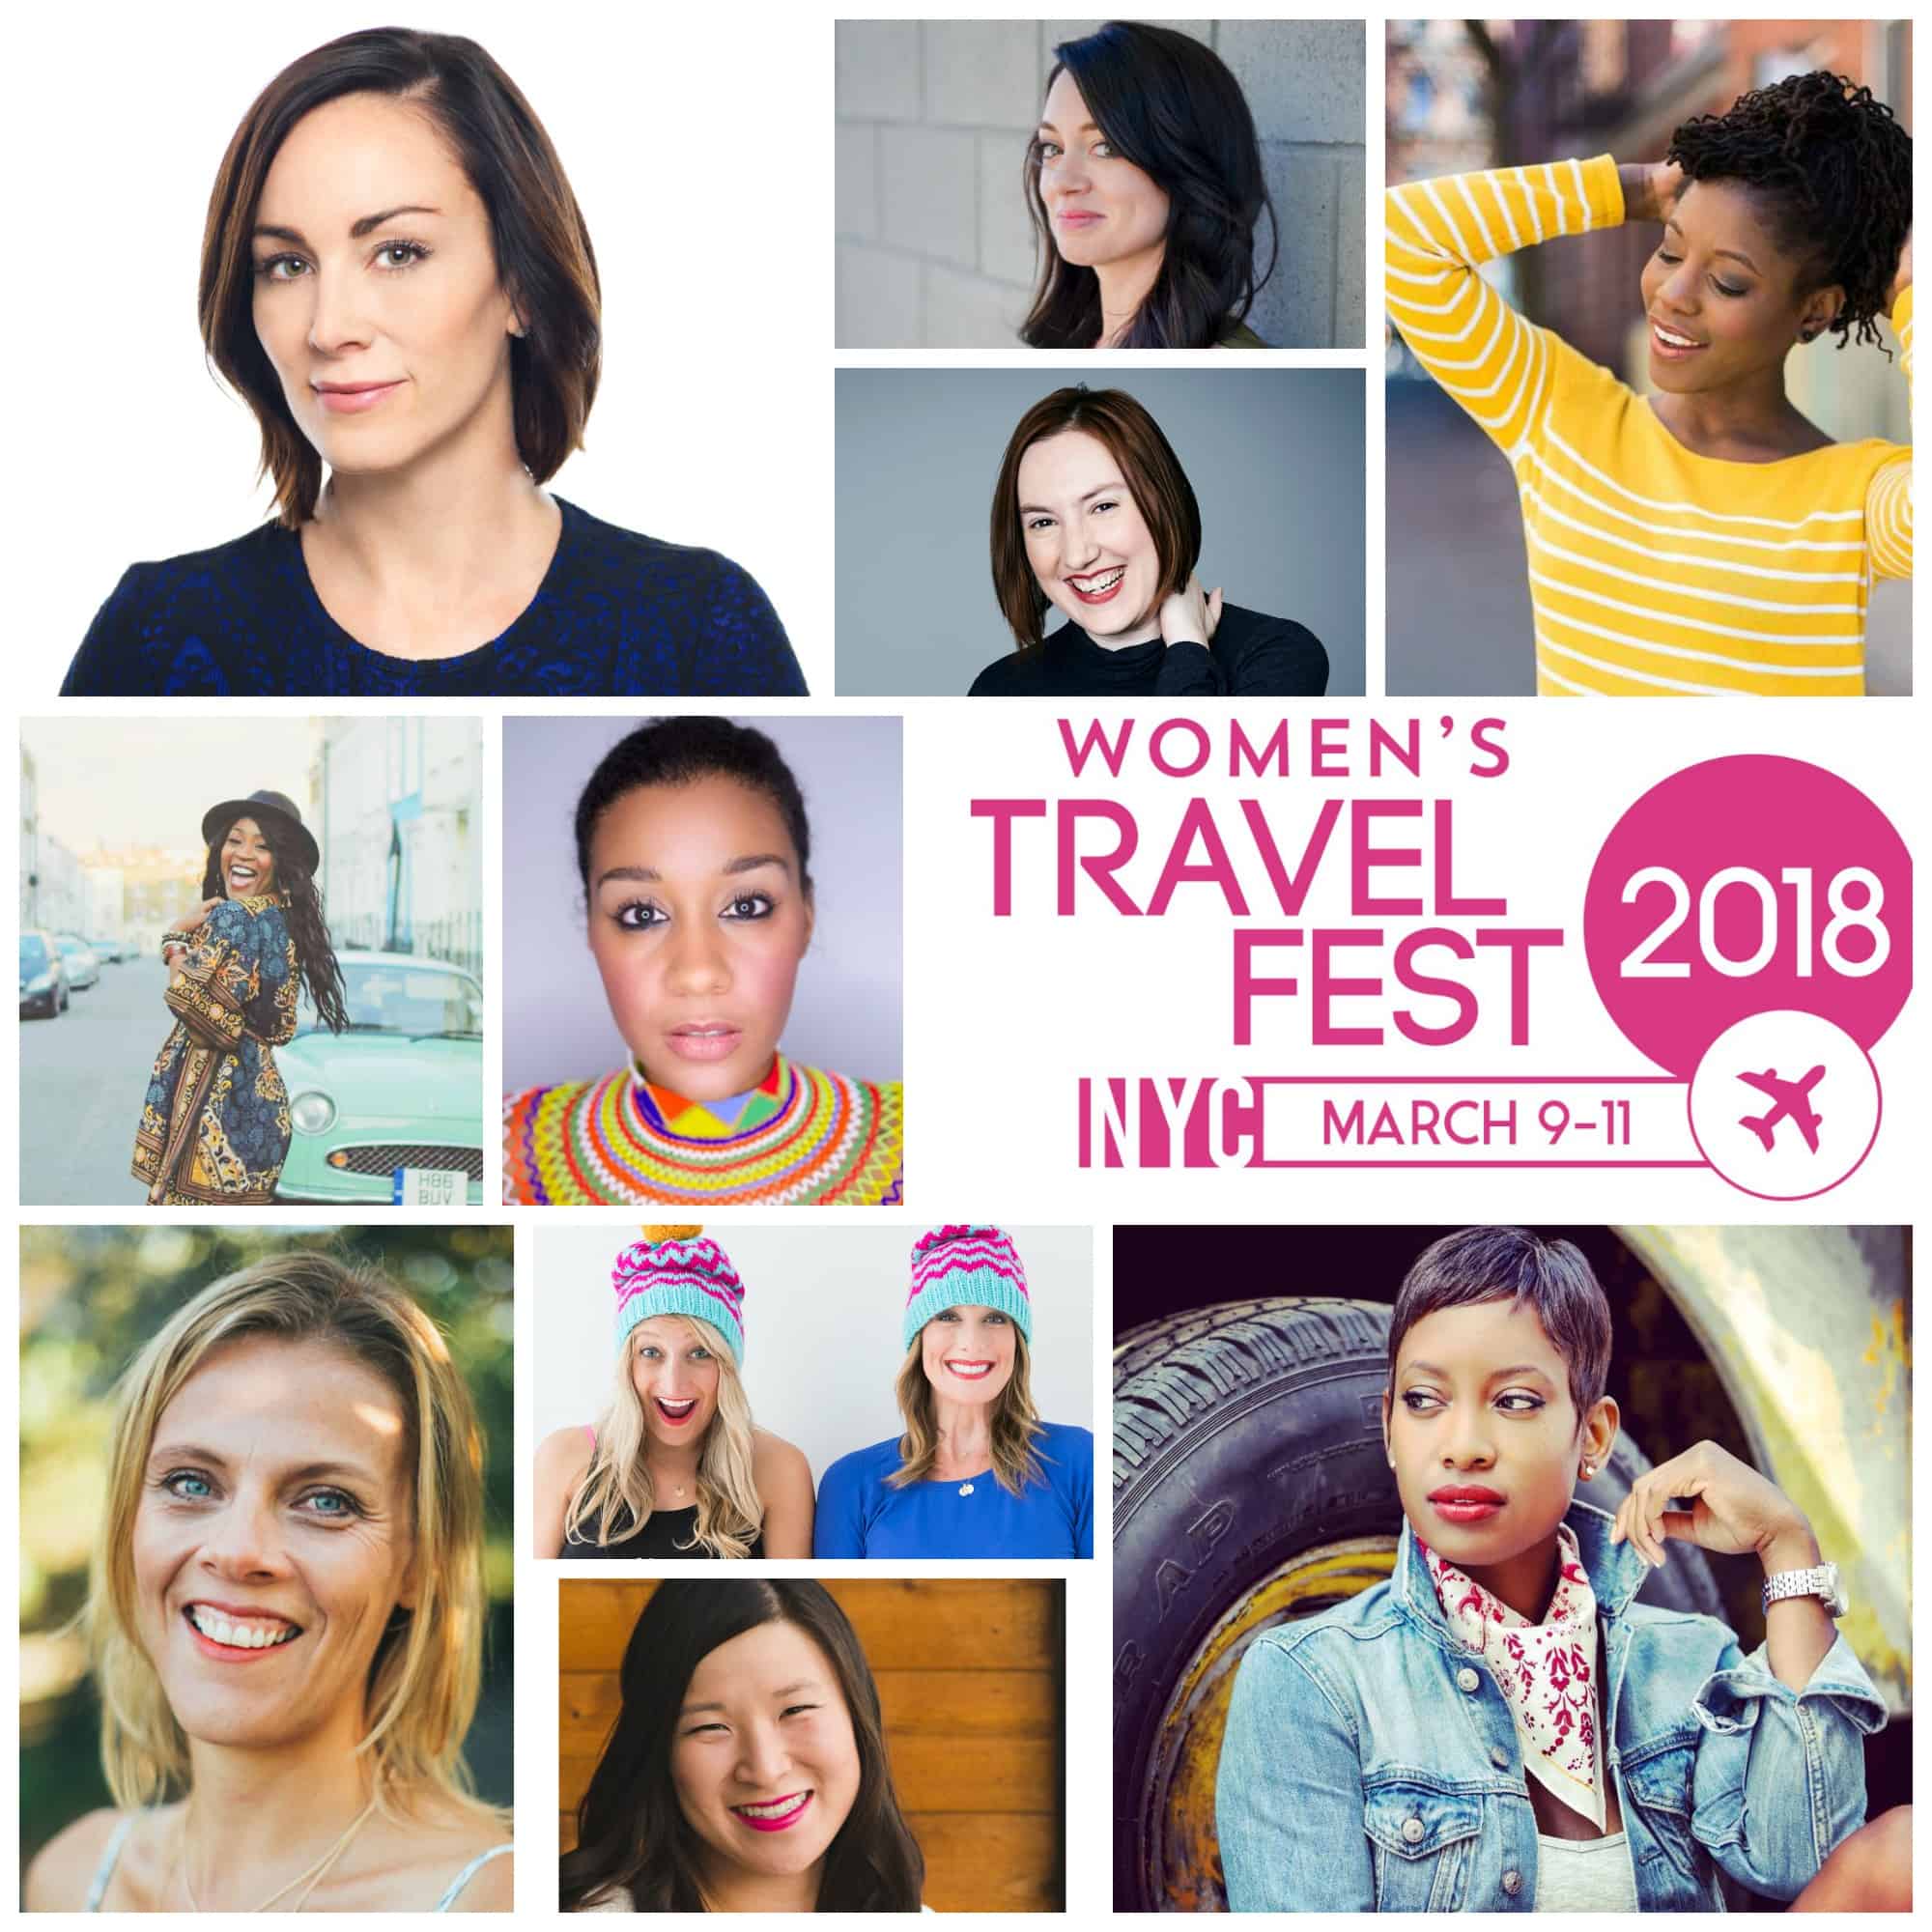 Women's Travel Fest in NYC